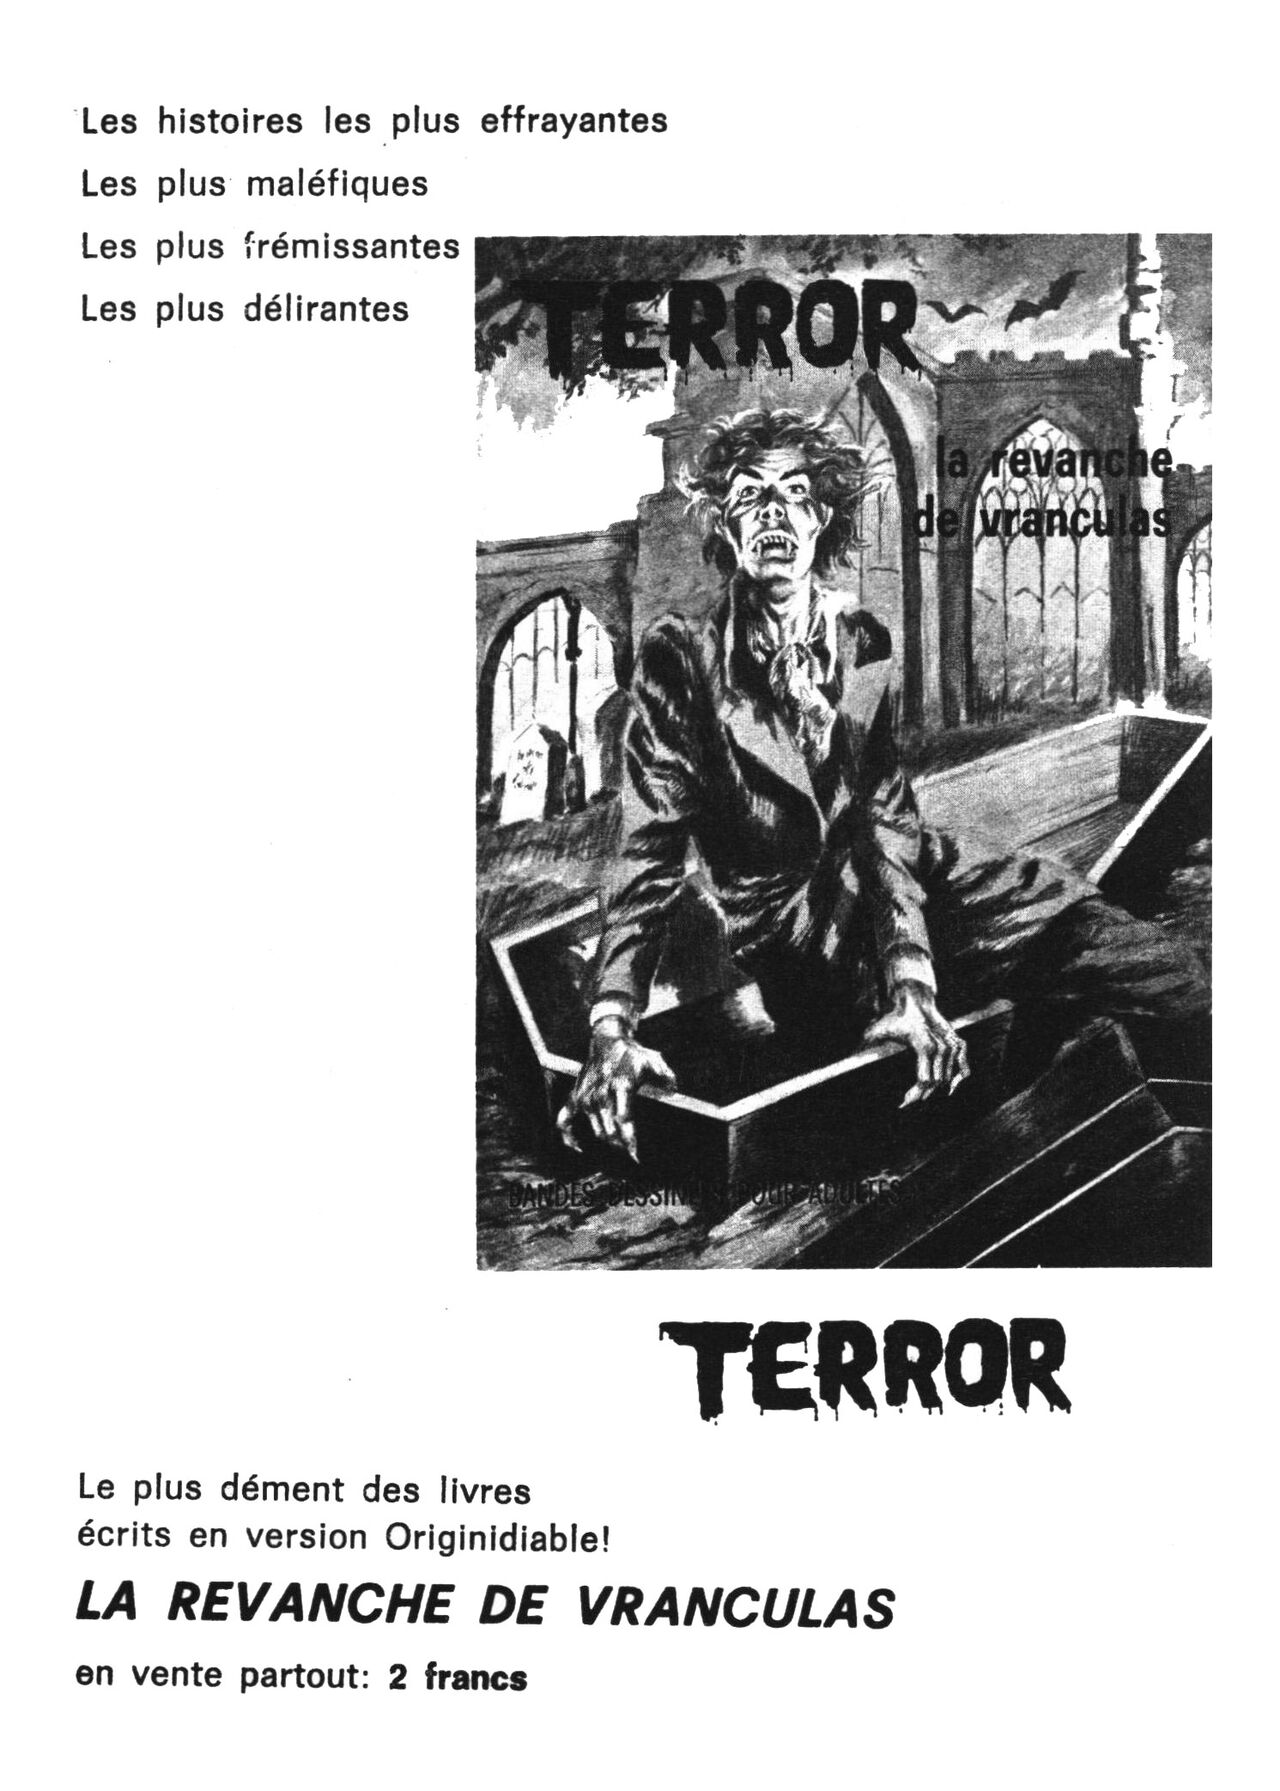 Terror 011 - Le Vampire des Carpates numero d'image 127